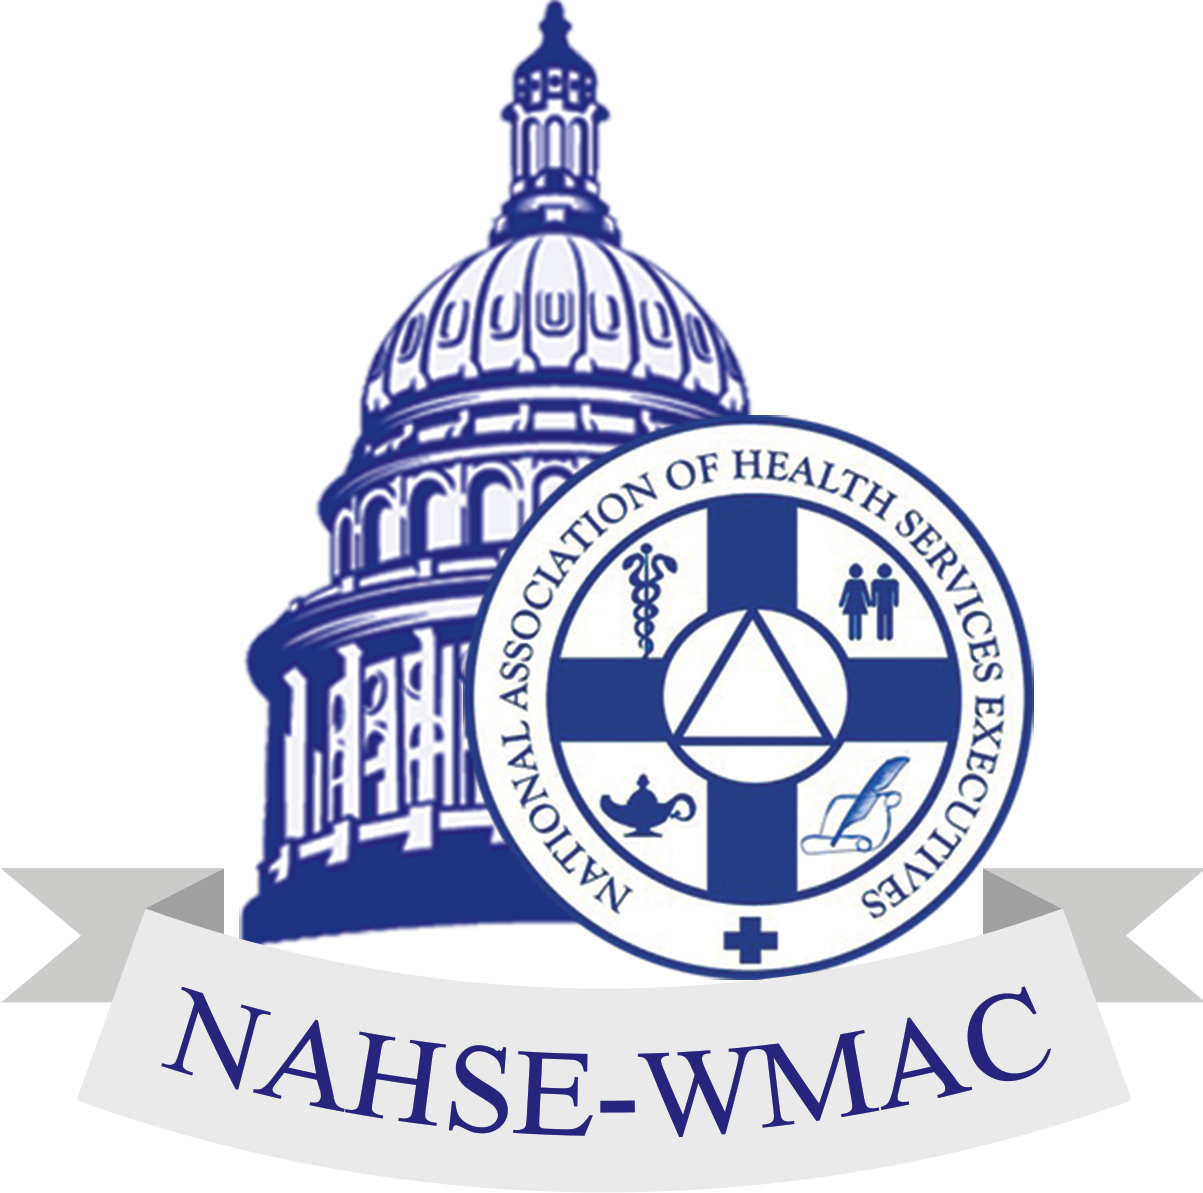 NAHSE-Washington Metropolitan Area Chapter